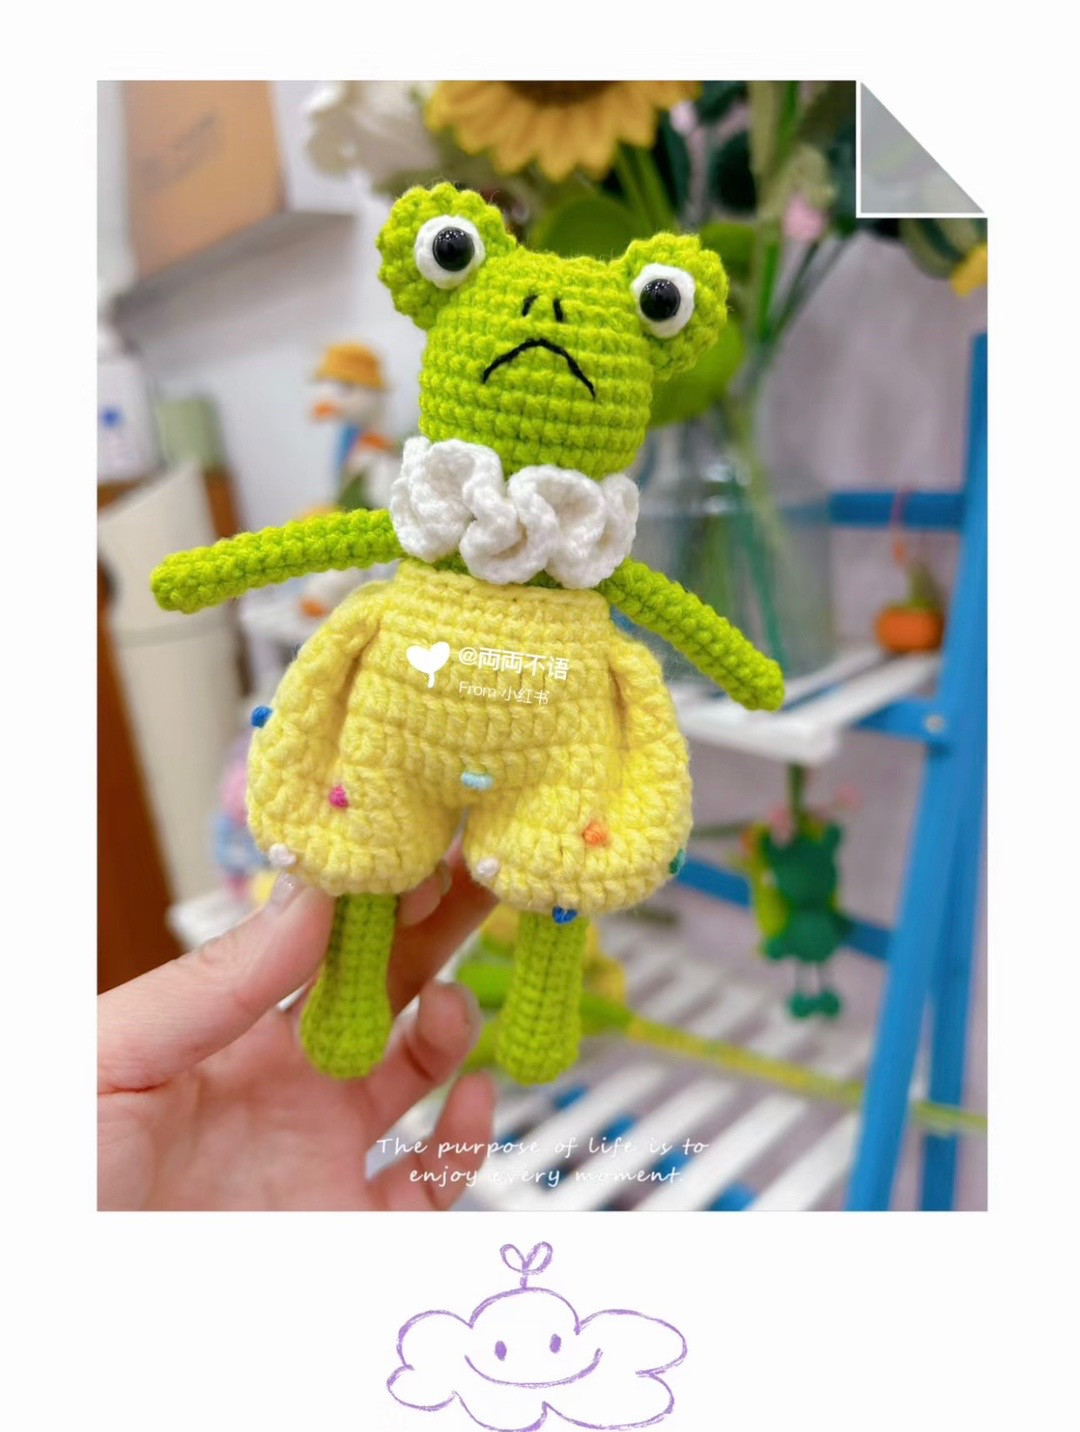 Crochet pattern of green frog with bulging eyes, wearing yellow pants.